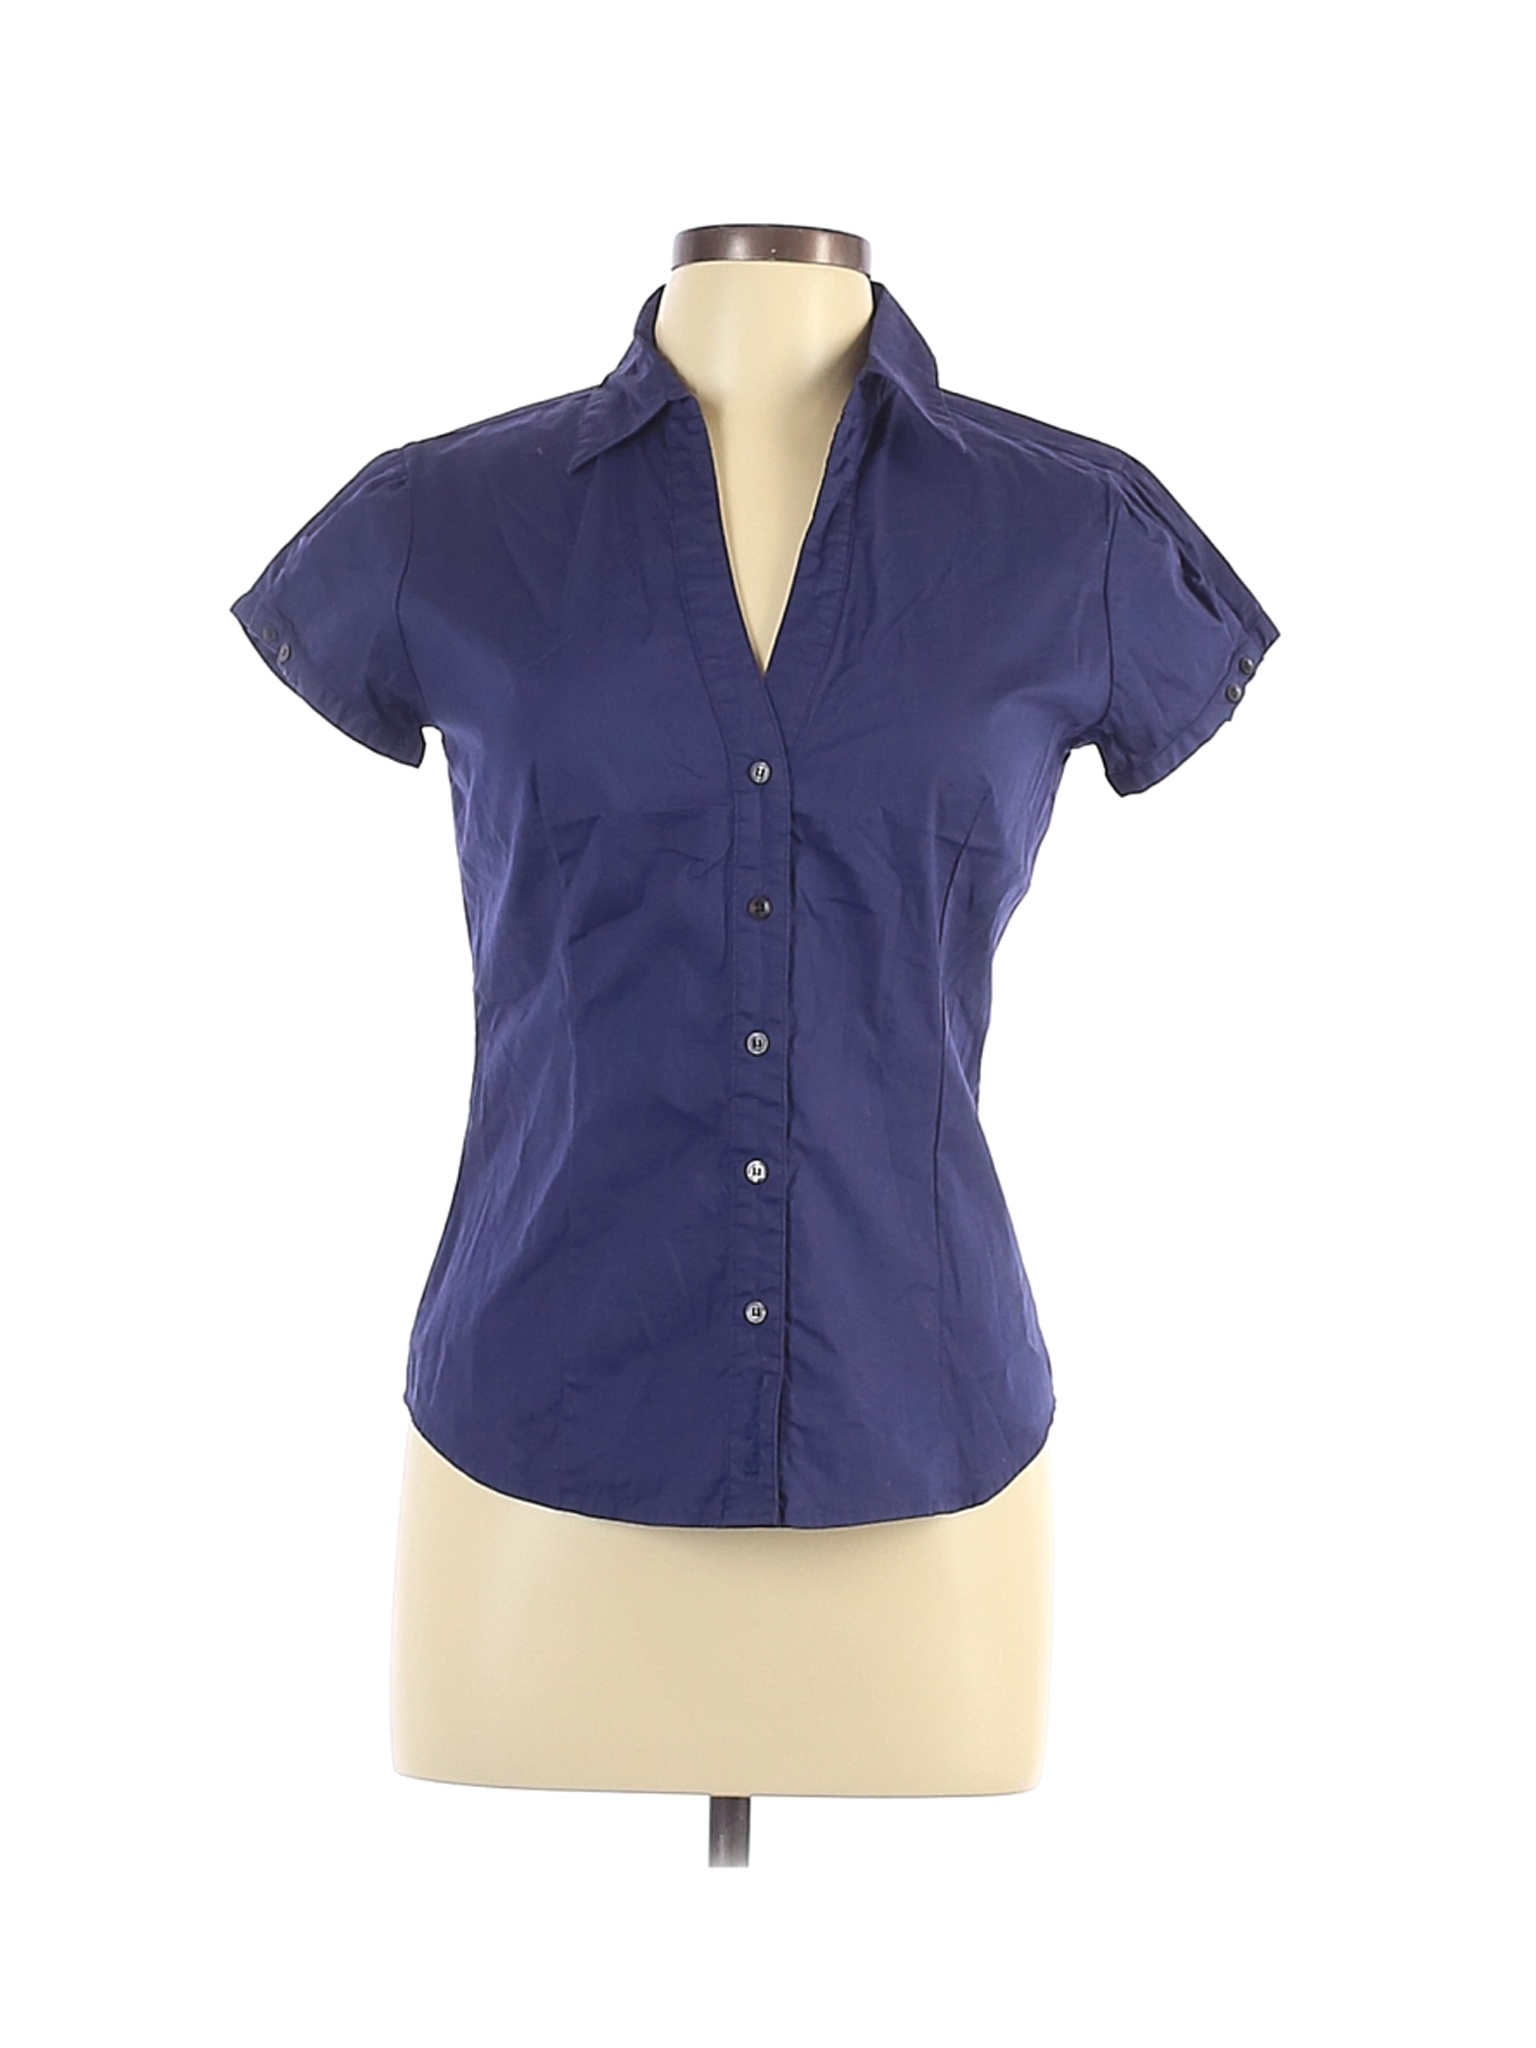 Ben Sherman Women Blue Short Sleeve Button-Down Shirt L | eBay